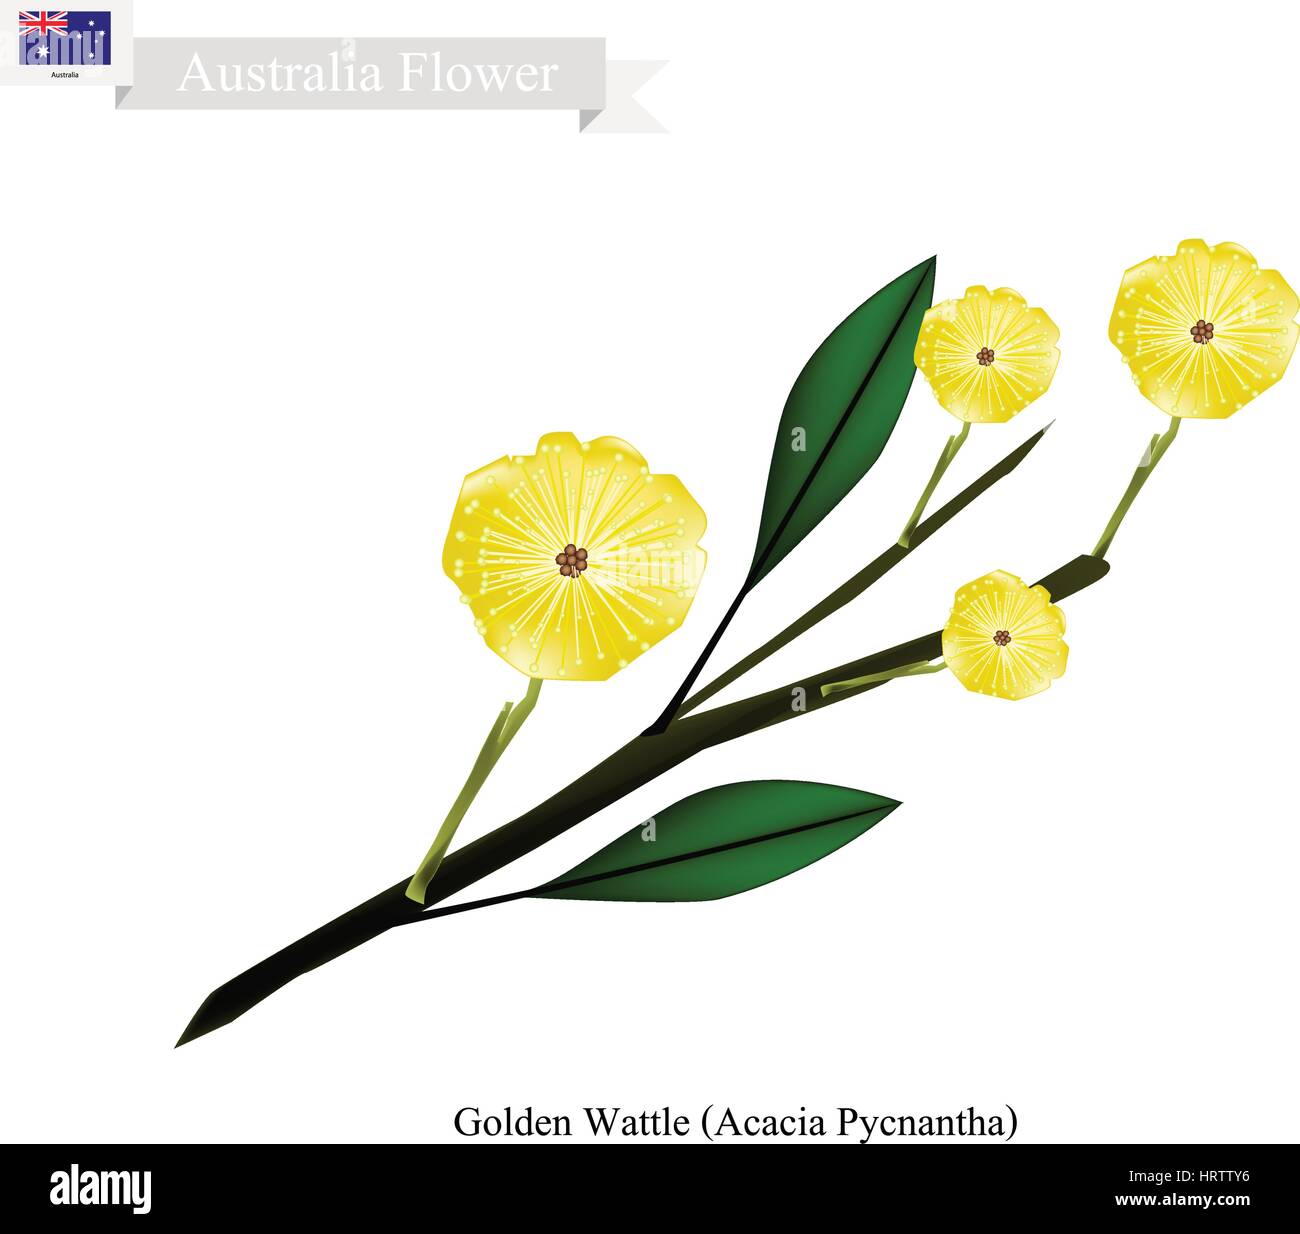 Australia Flower, Illustration of Golden Wattle Flowers or Acacia Pycnantha Blossom. The National Flower of Australia. Stock Vector